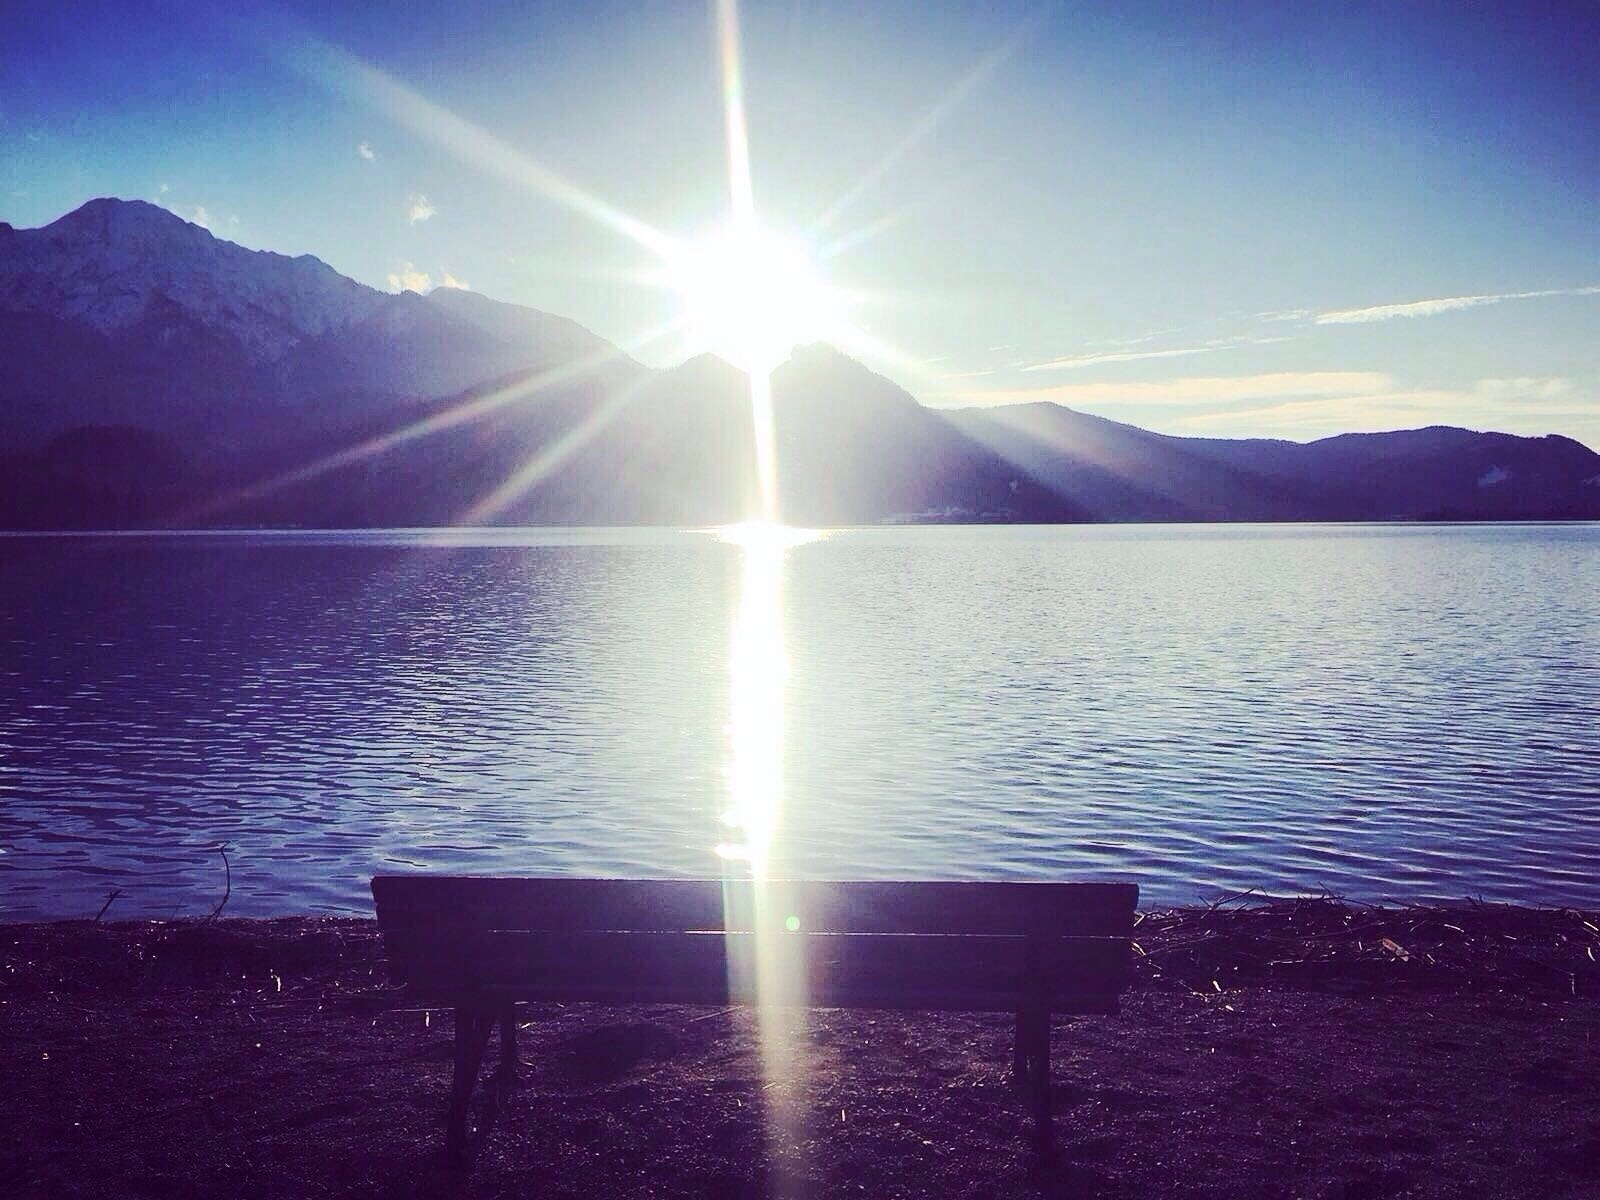 Lake #weekend #mountains #alpen